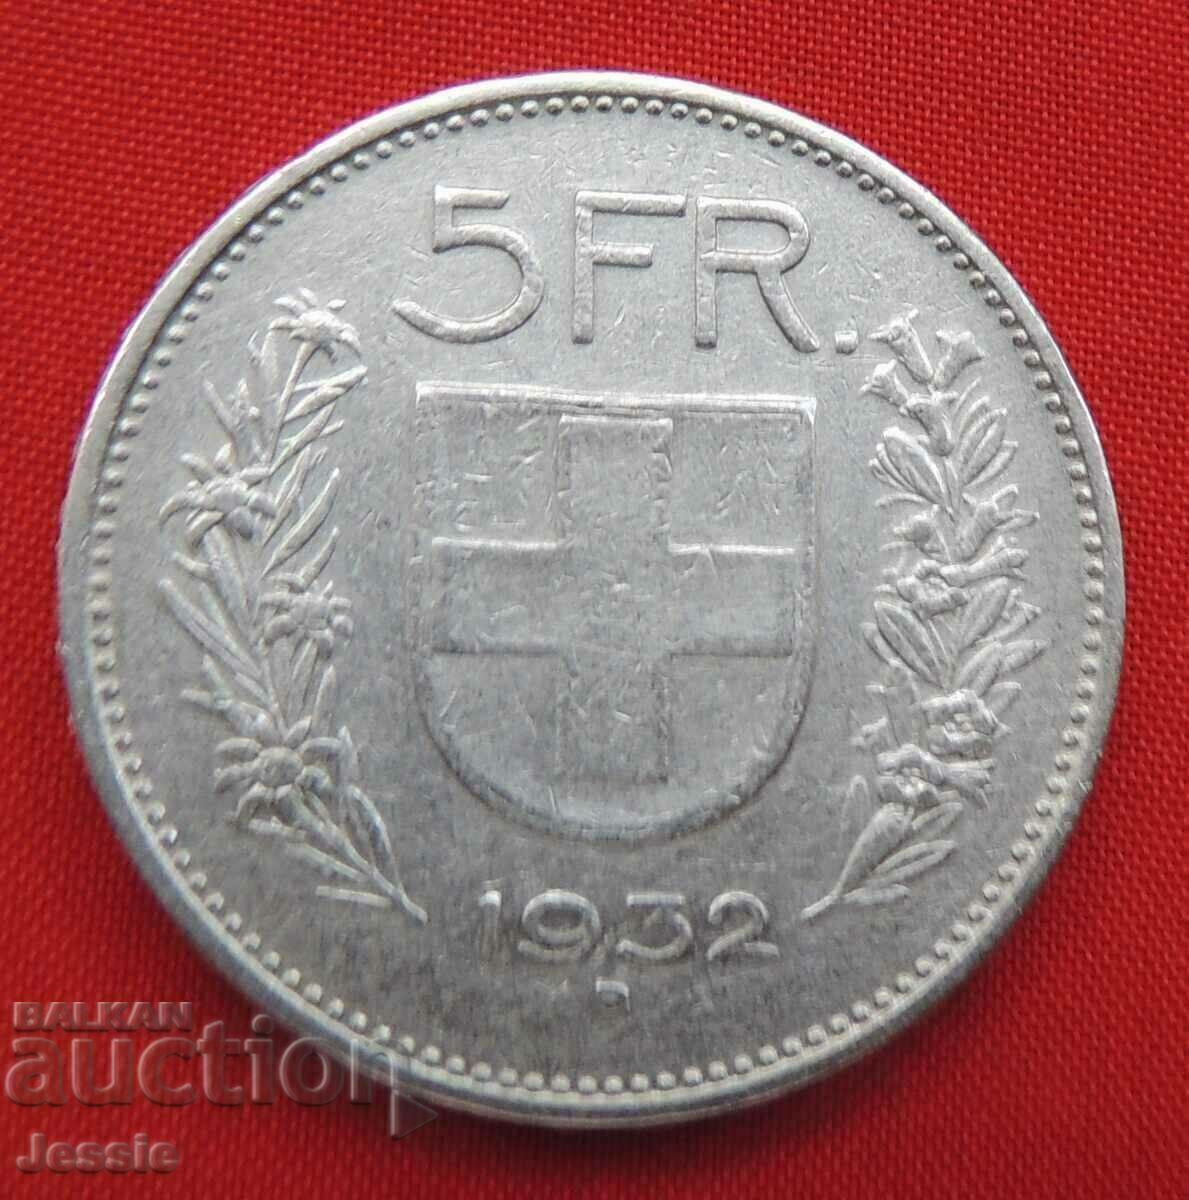 5 Francs 1932 B Switzerland Silver